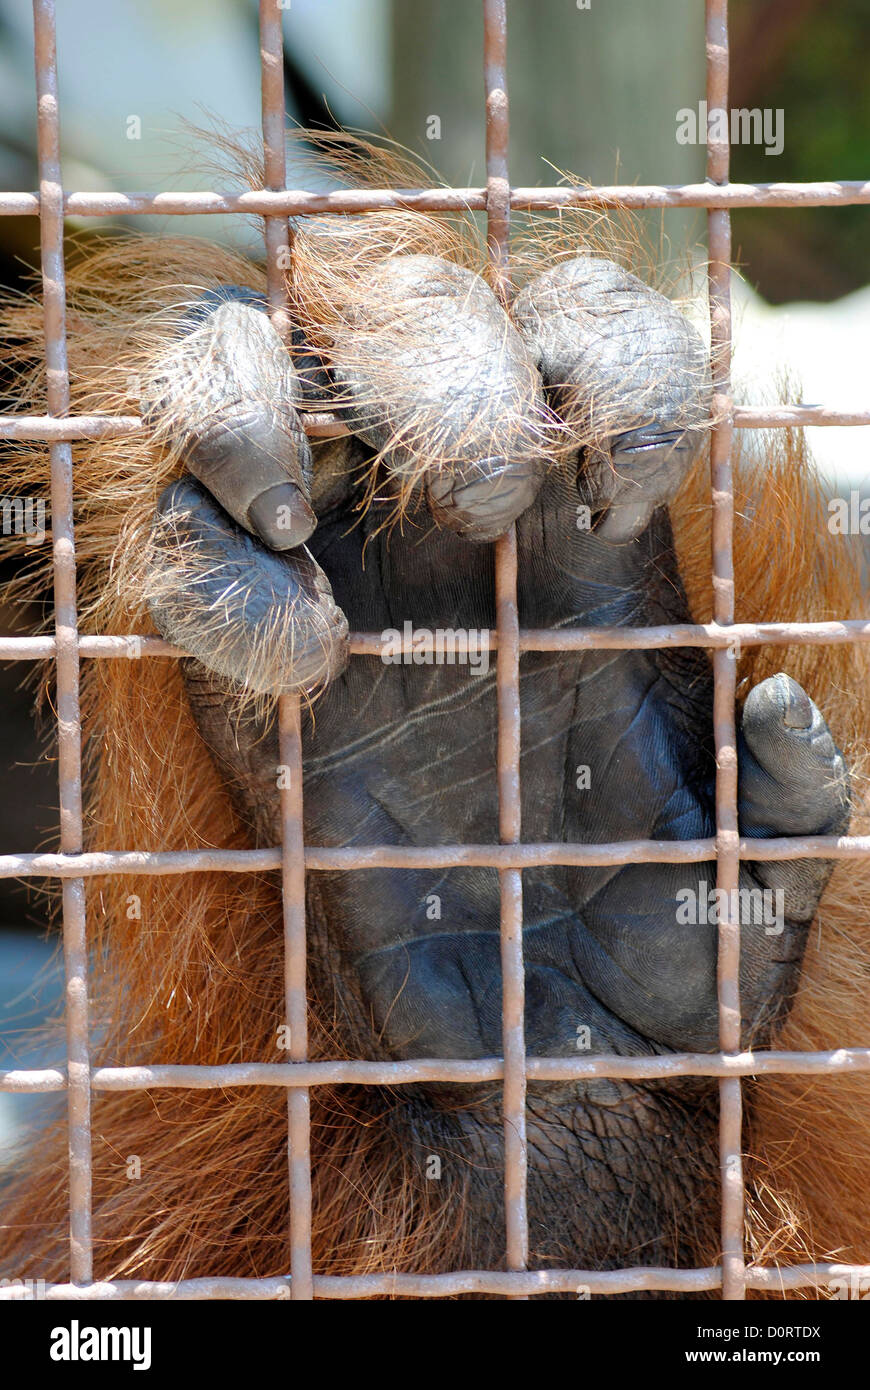 Orangutan hand (Pongo pygmaeus) Stock Photo